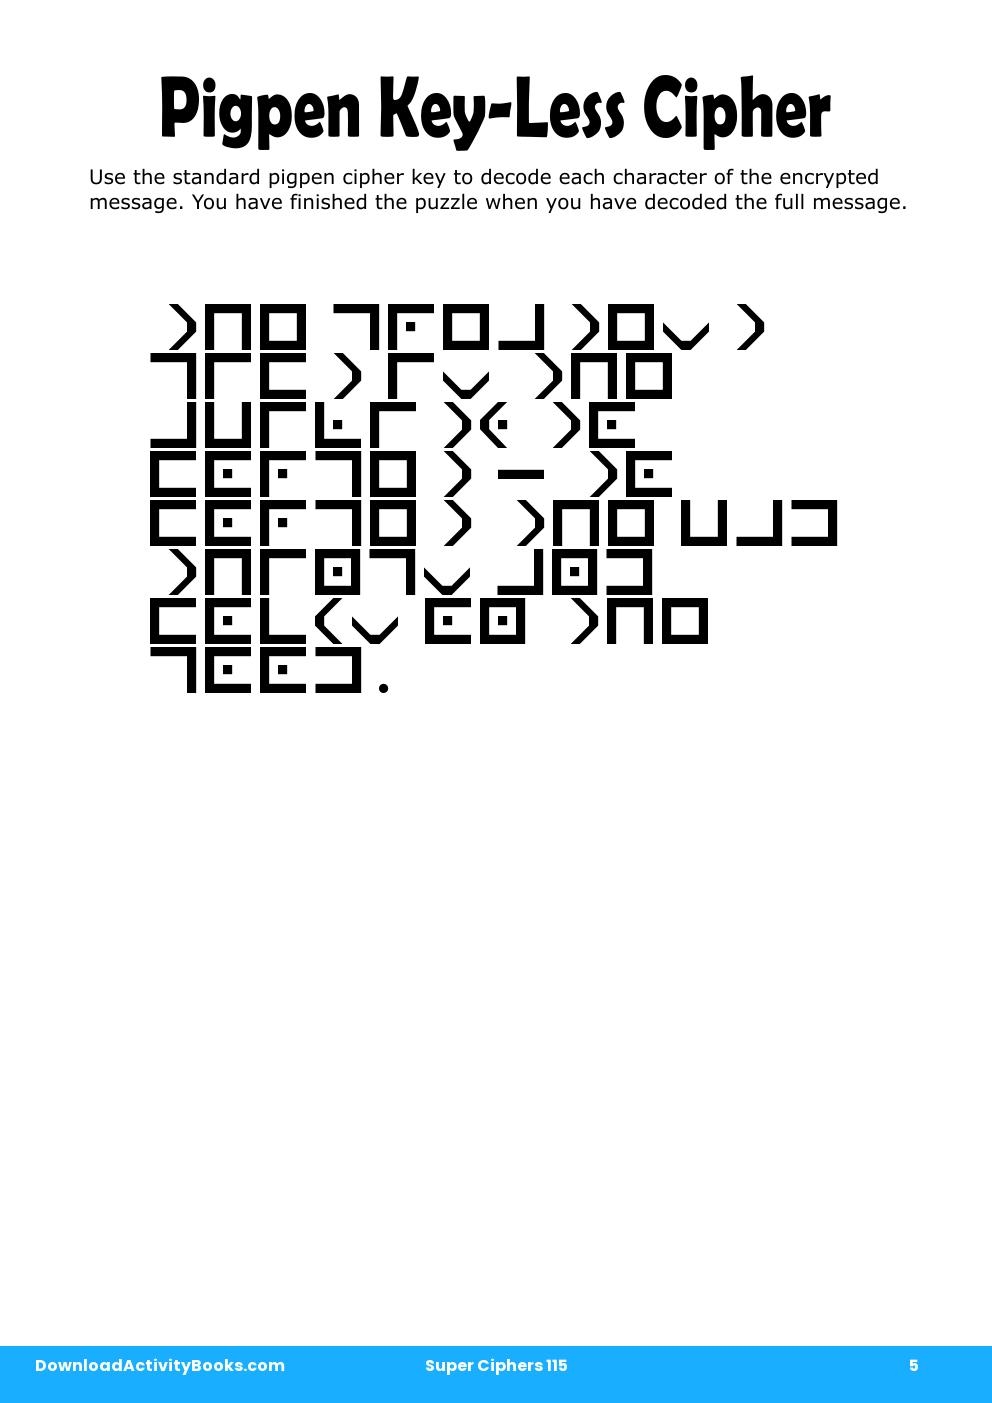 Pigpen Cipher in Super Ciphers 115